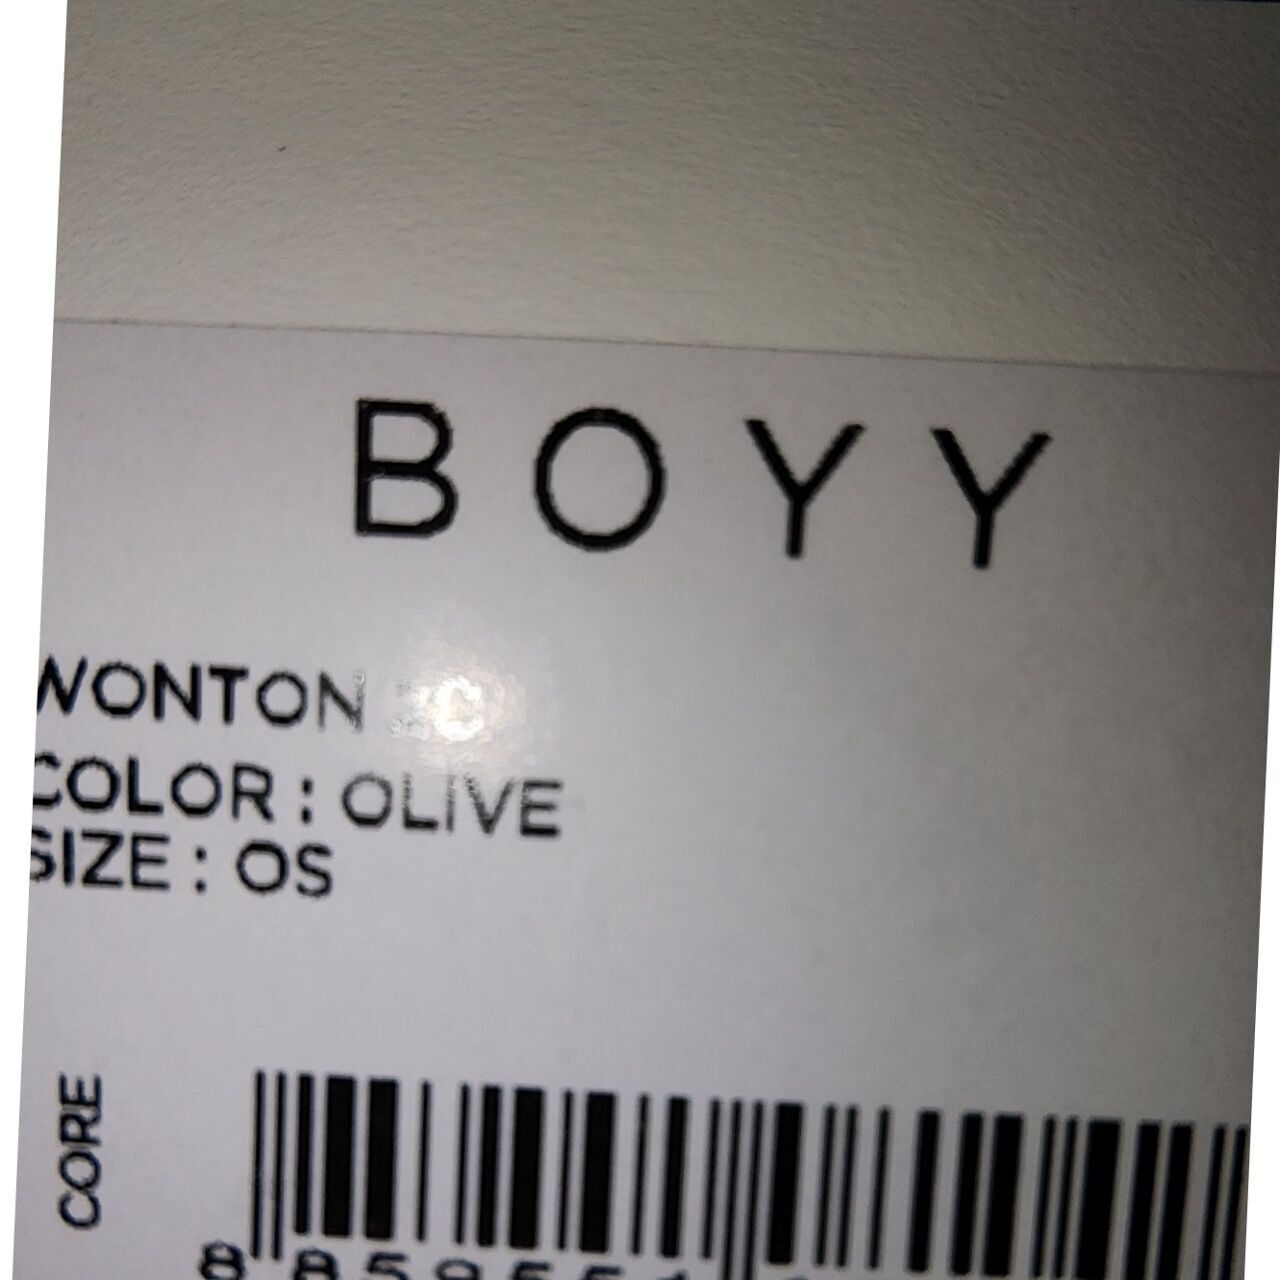 Boyy Wanton 20 Pebble Olive